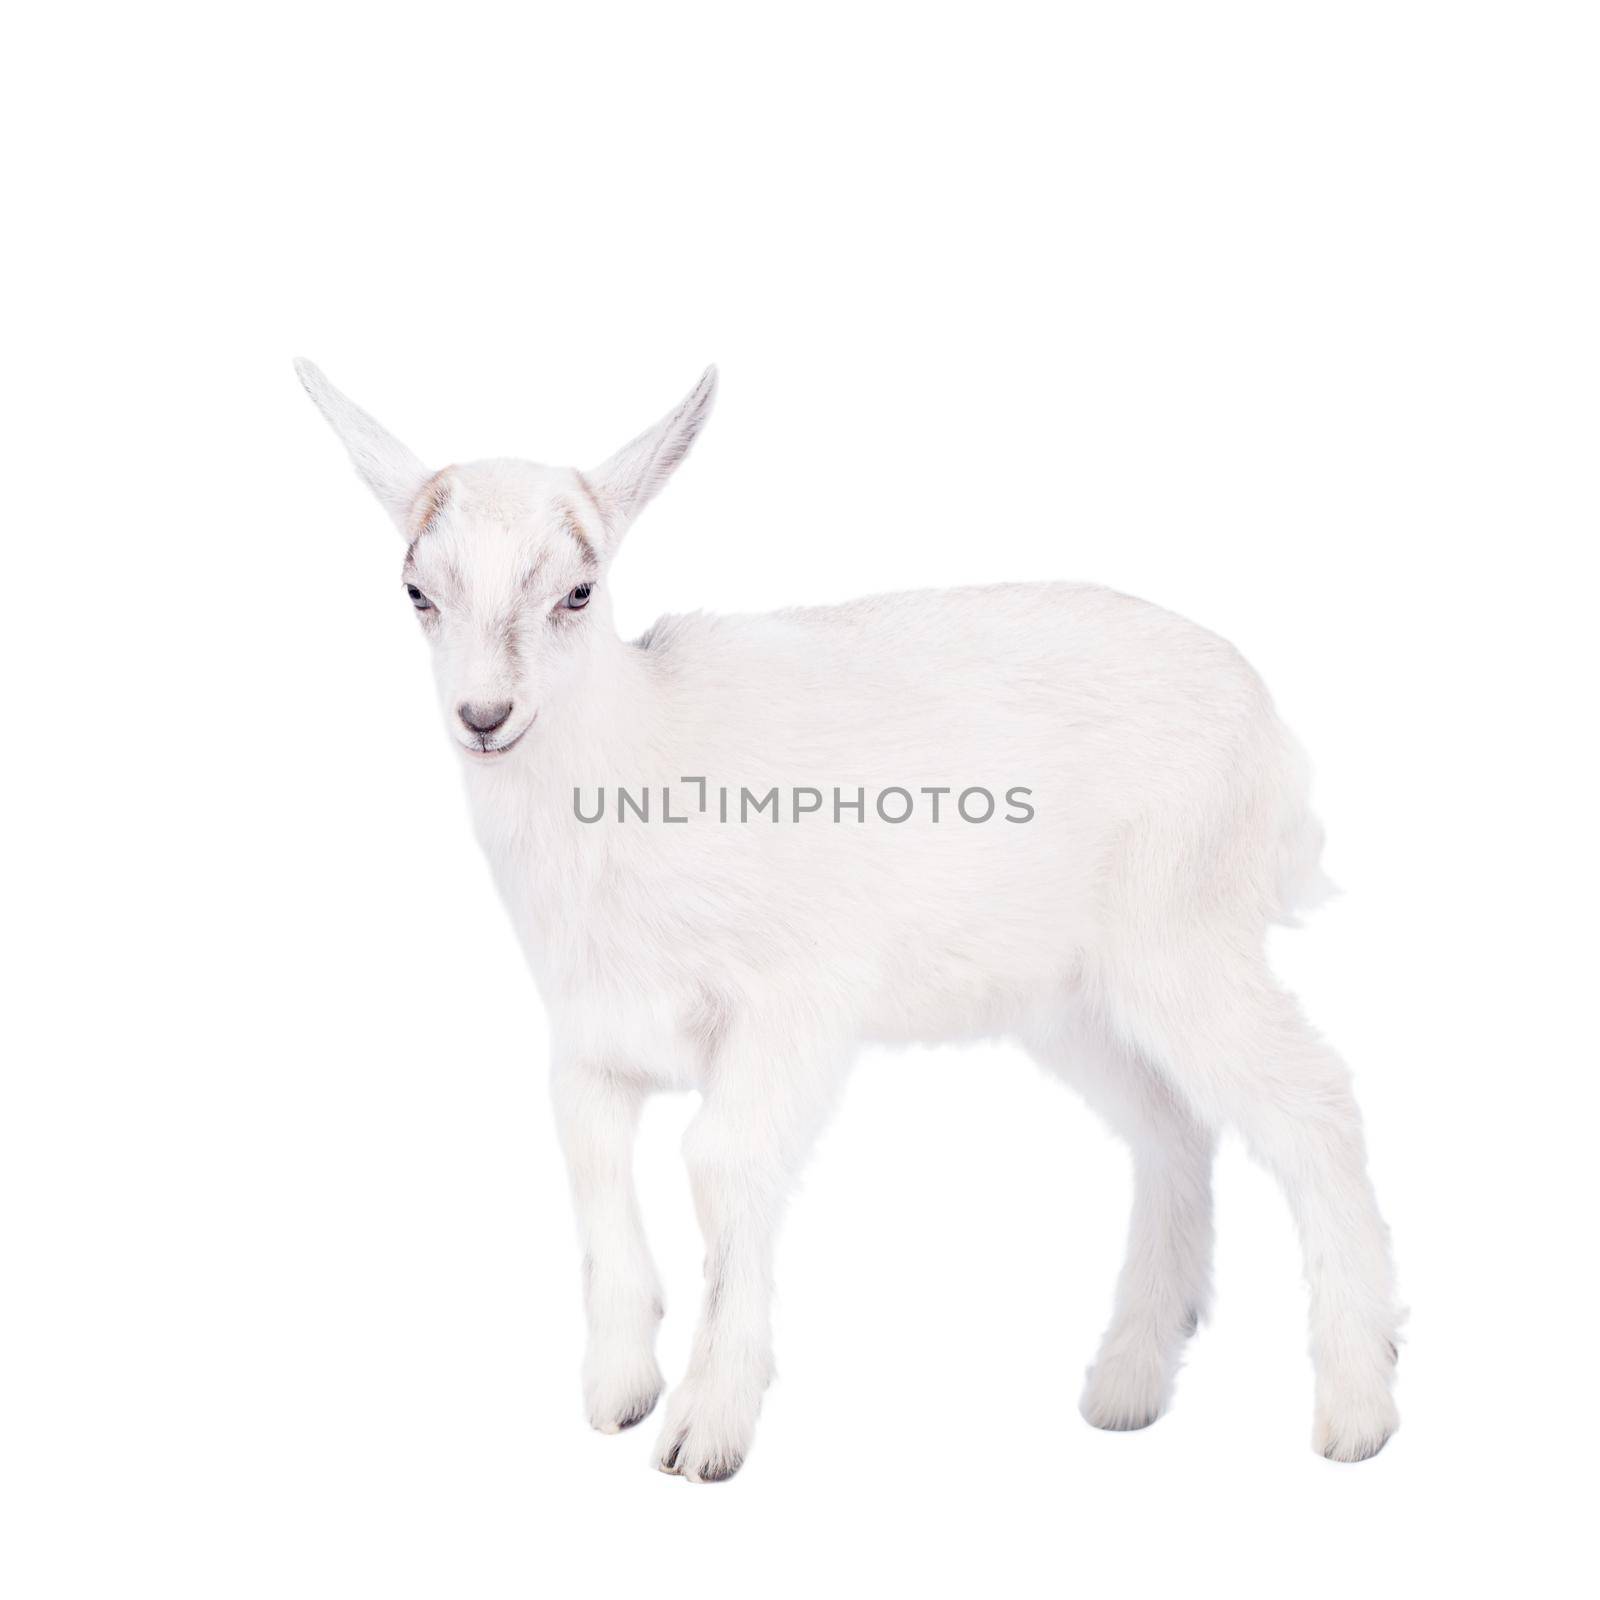 Little white goatling isolated on white background